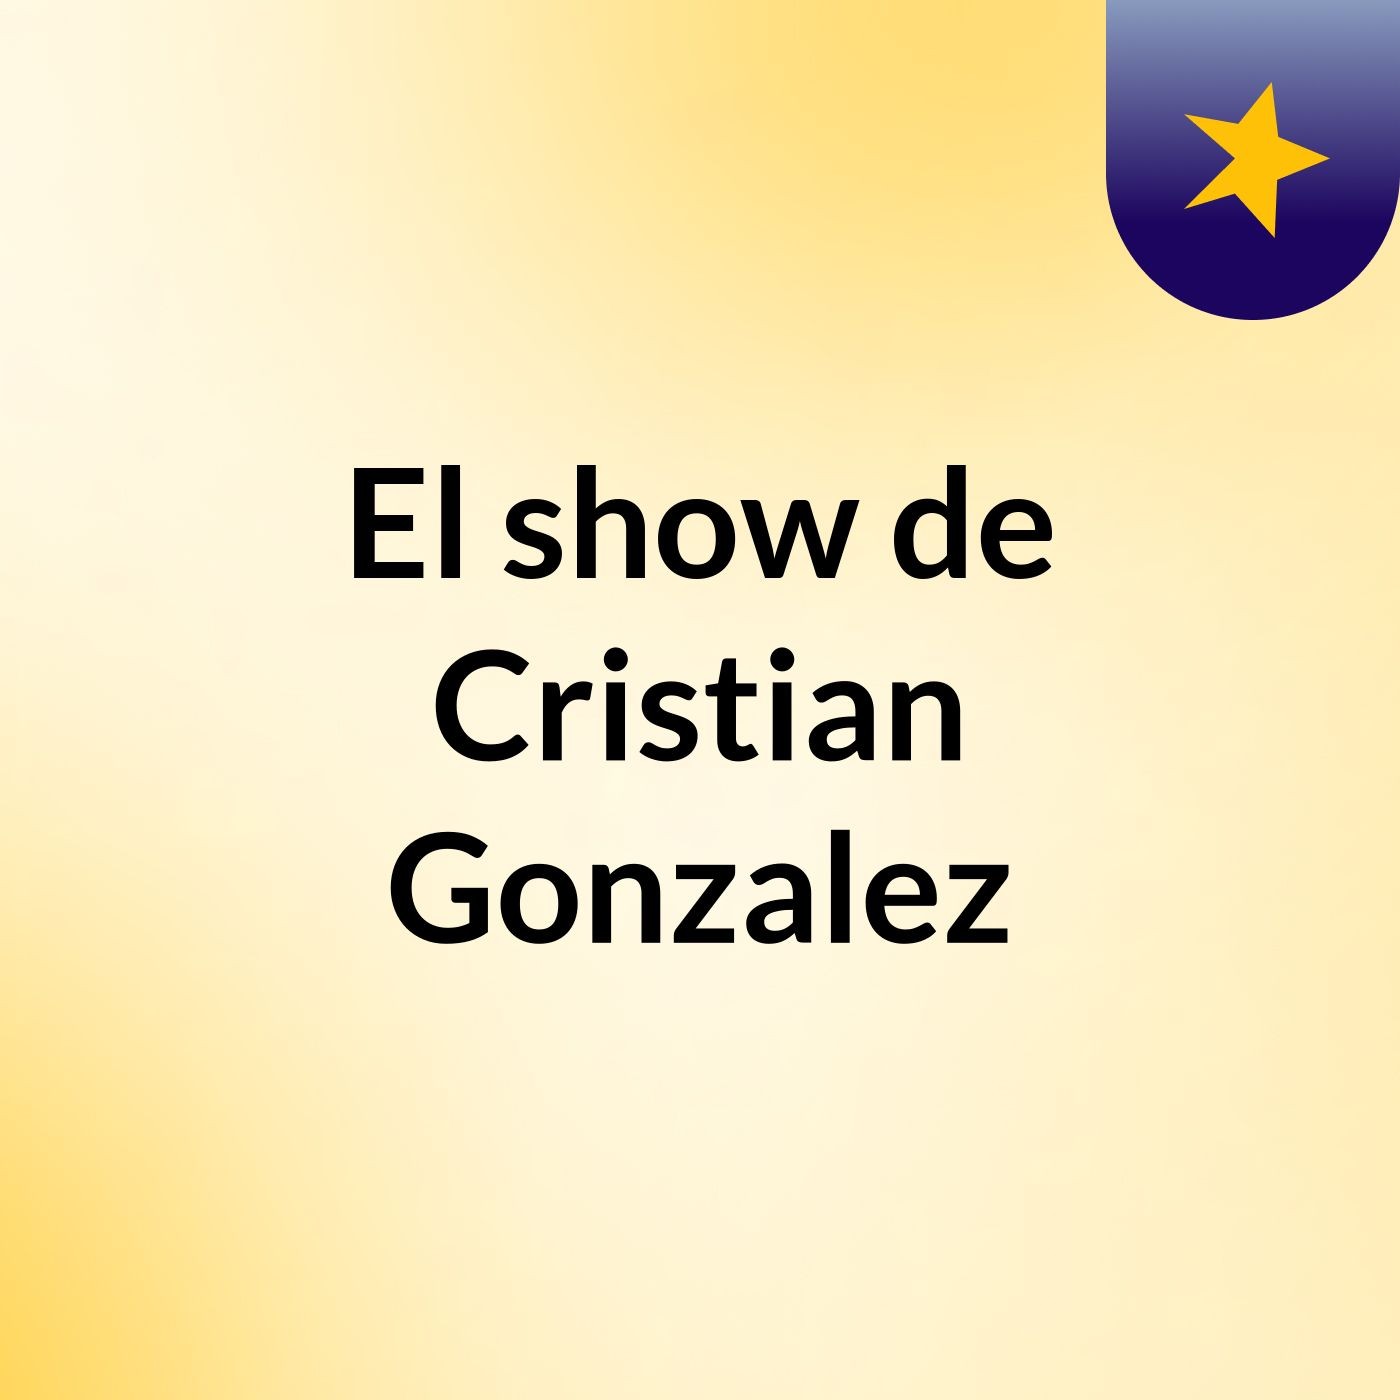 Episodio 17 - El show de Cristian Gonzalez